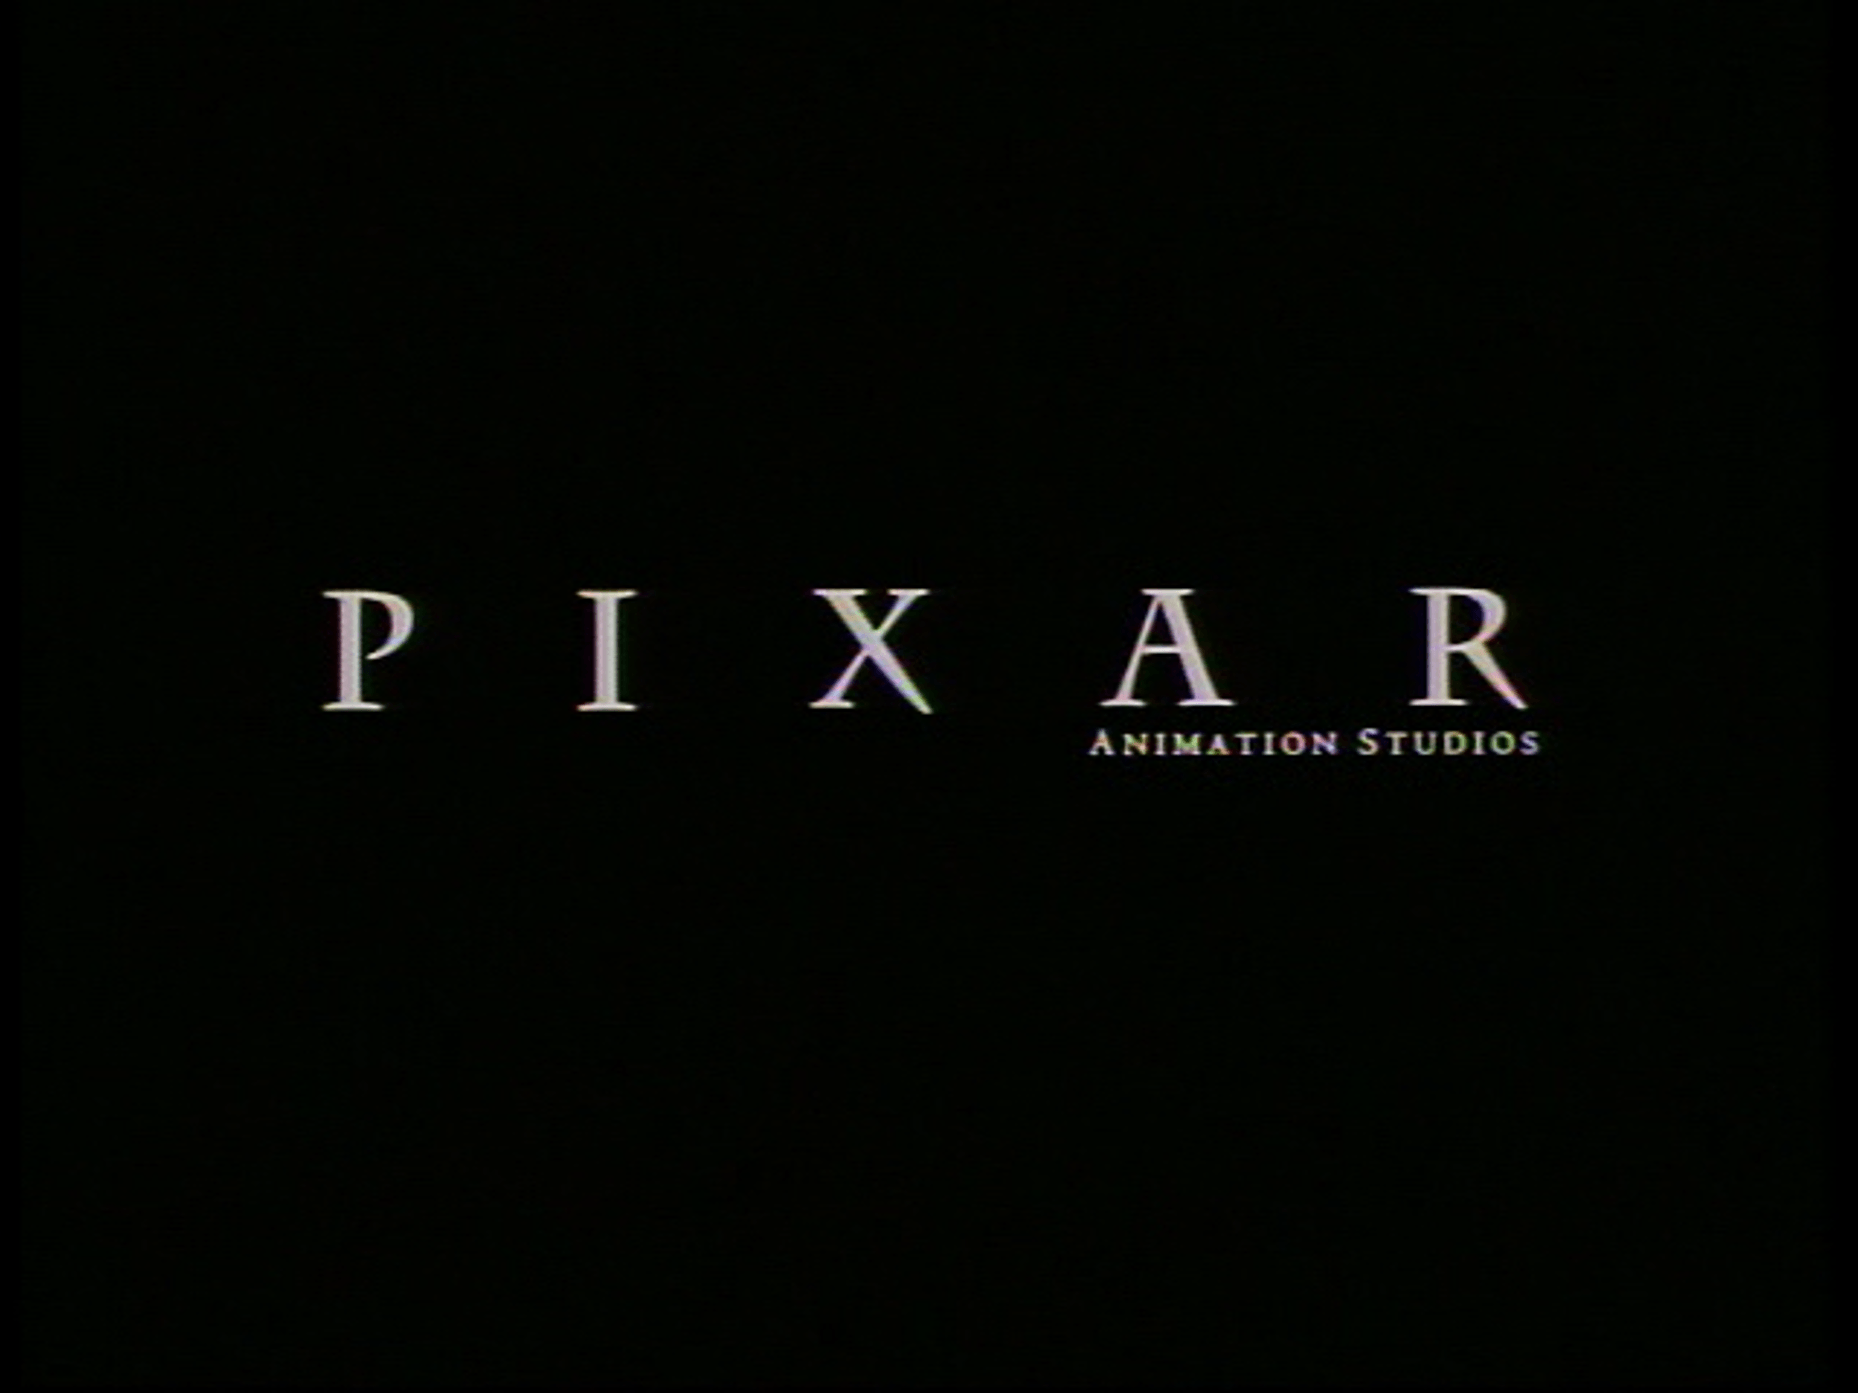 Pixar Logo - Image - PIXAR LOGO (Toy Story Trailer Variant).png | Walt Disney ...